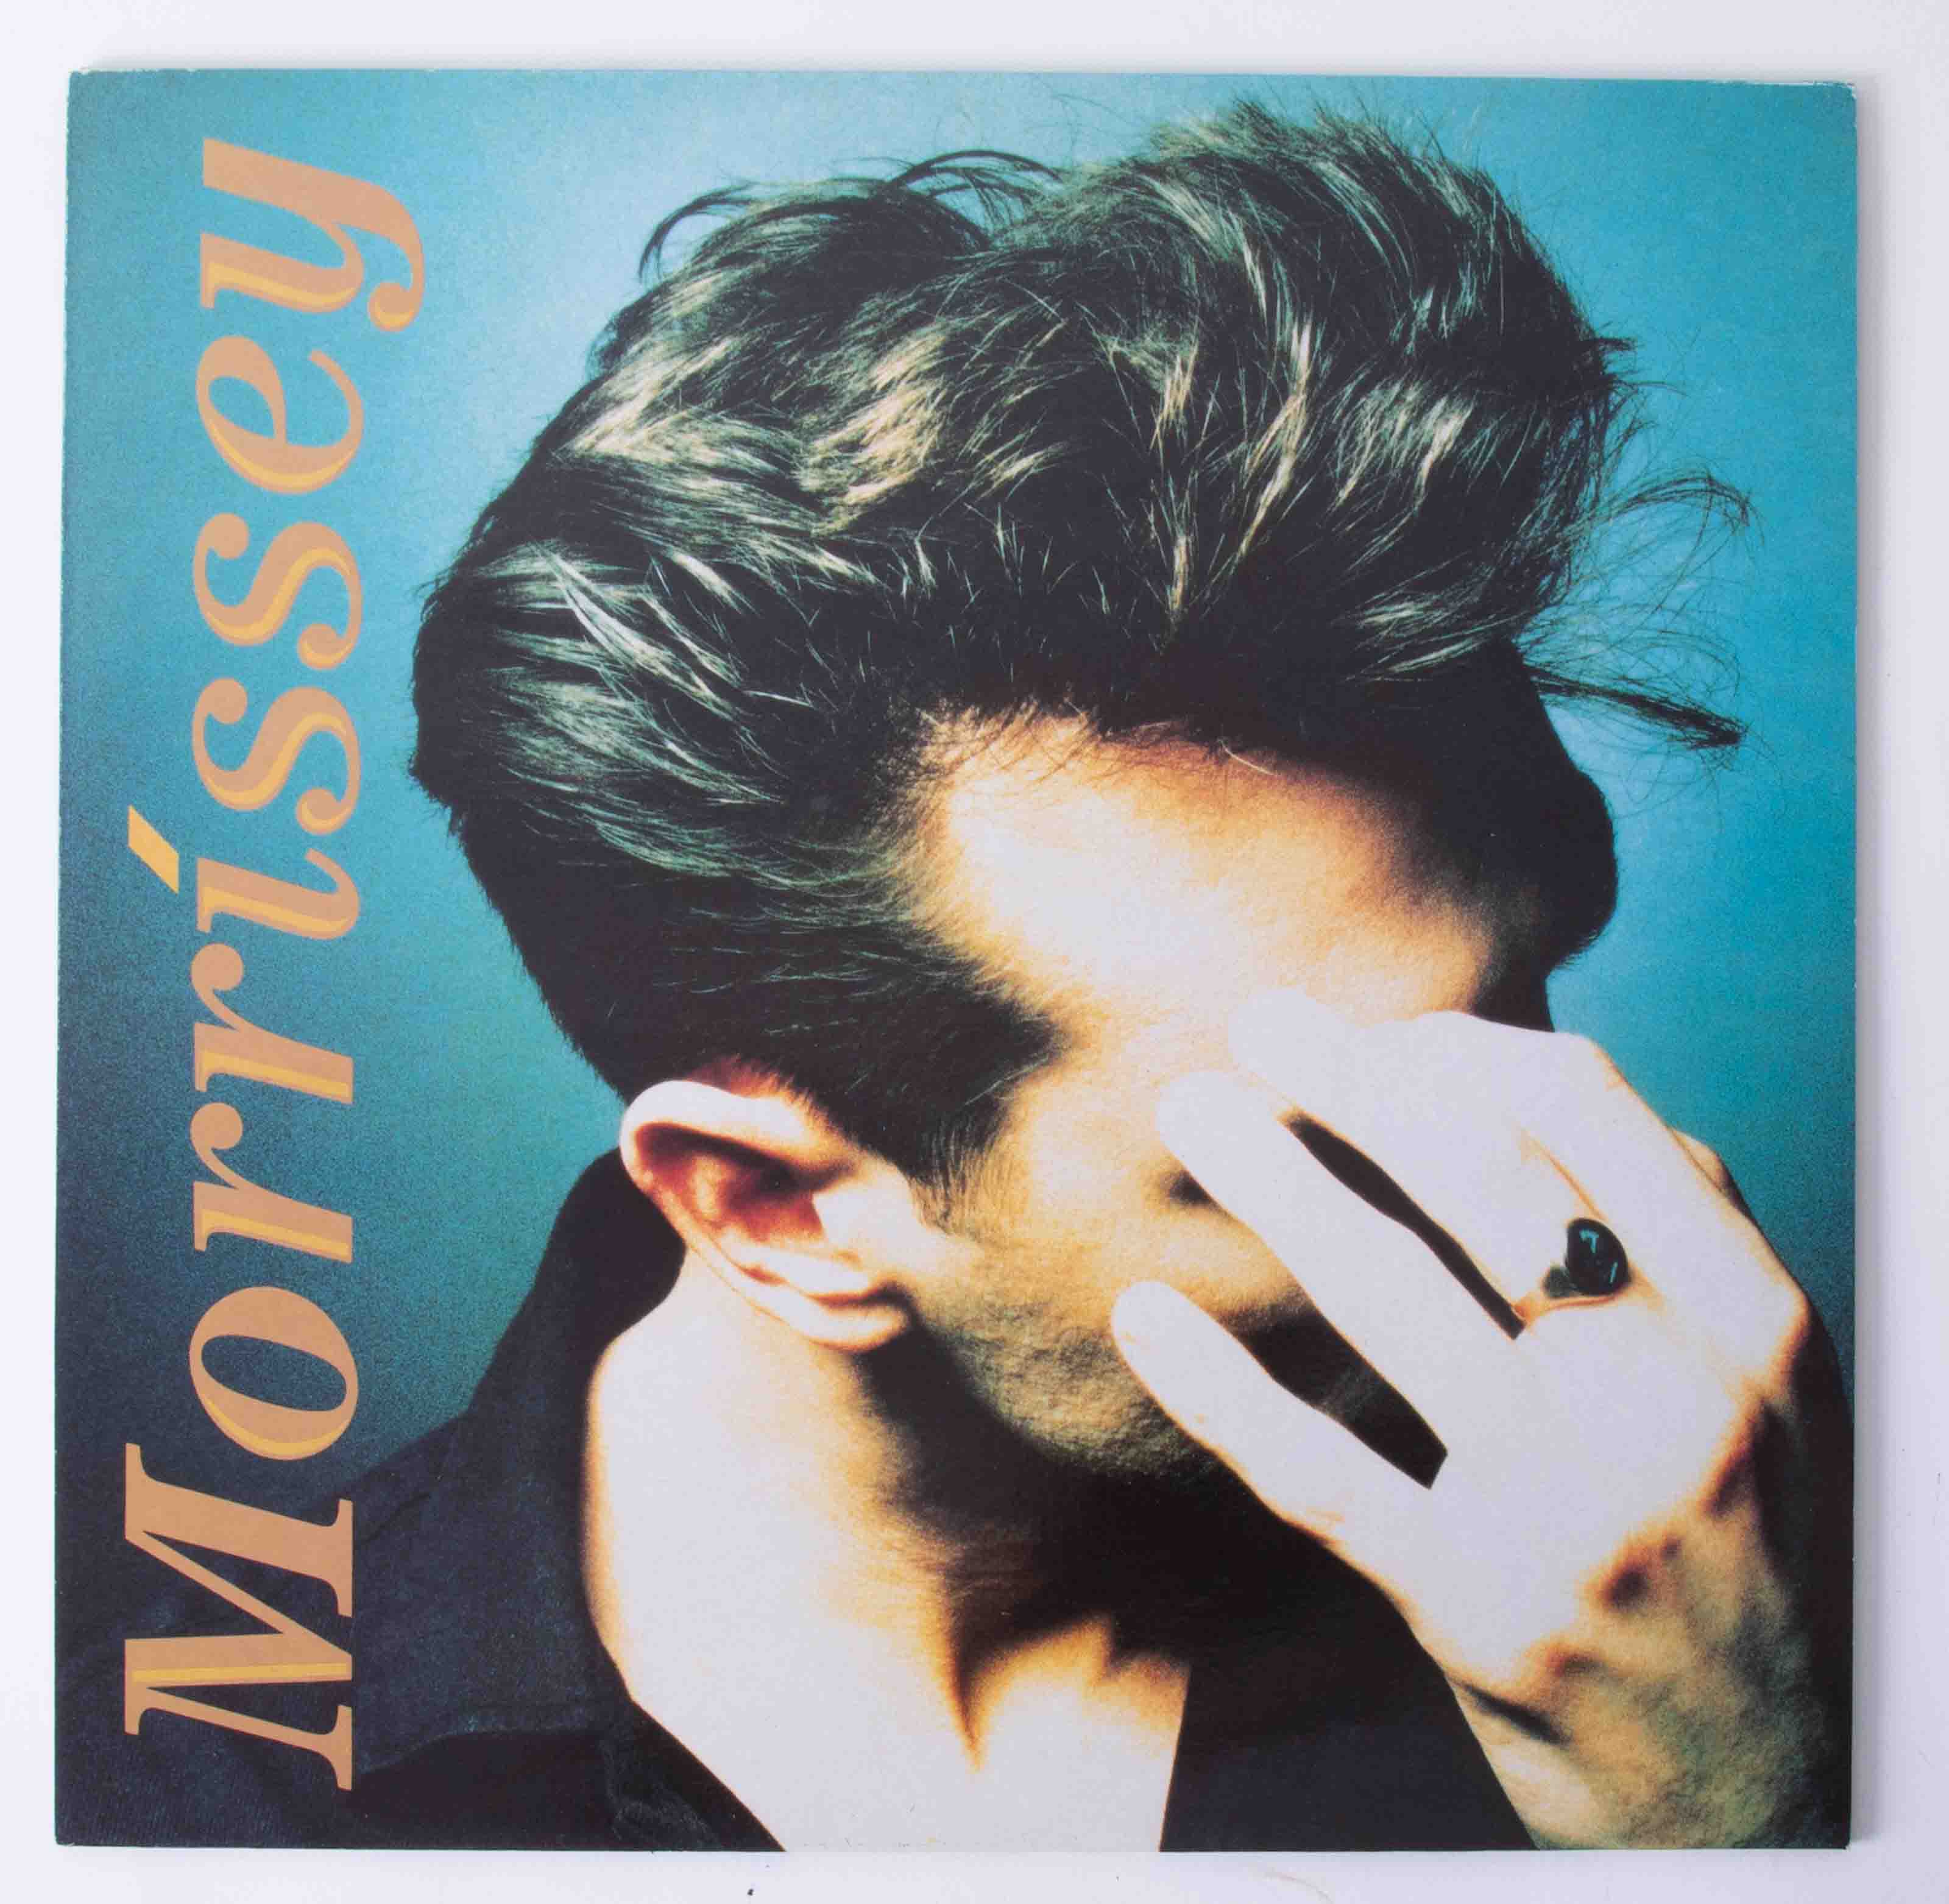 Vinyl 12 Morrissey 'Everyday Is Like A Sunday' 1988 12" single, 12pop 1619, original pressing,